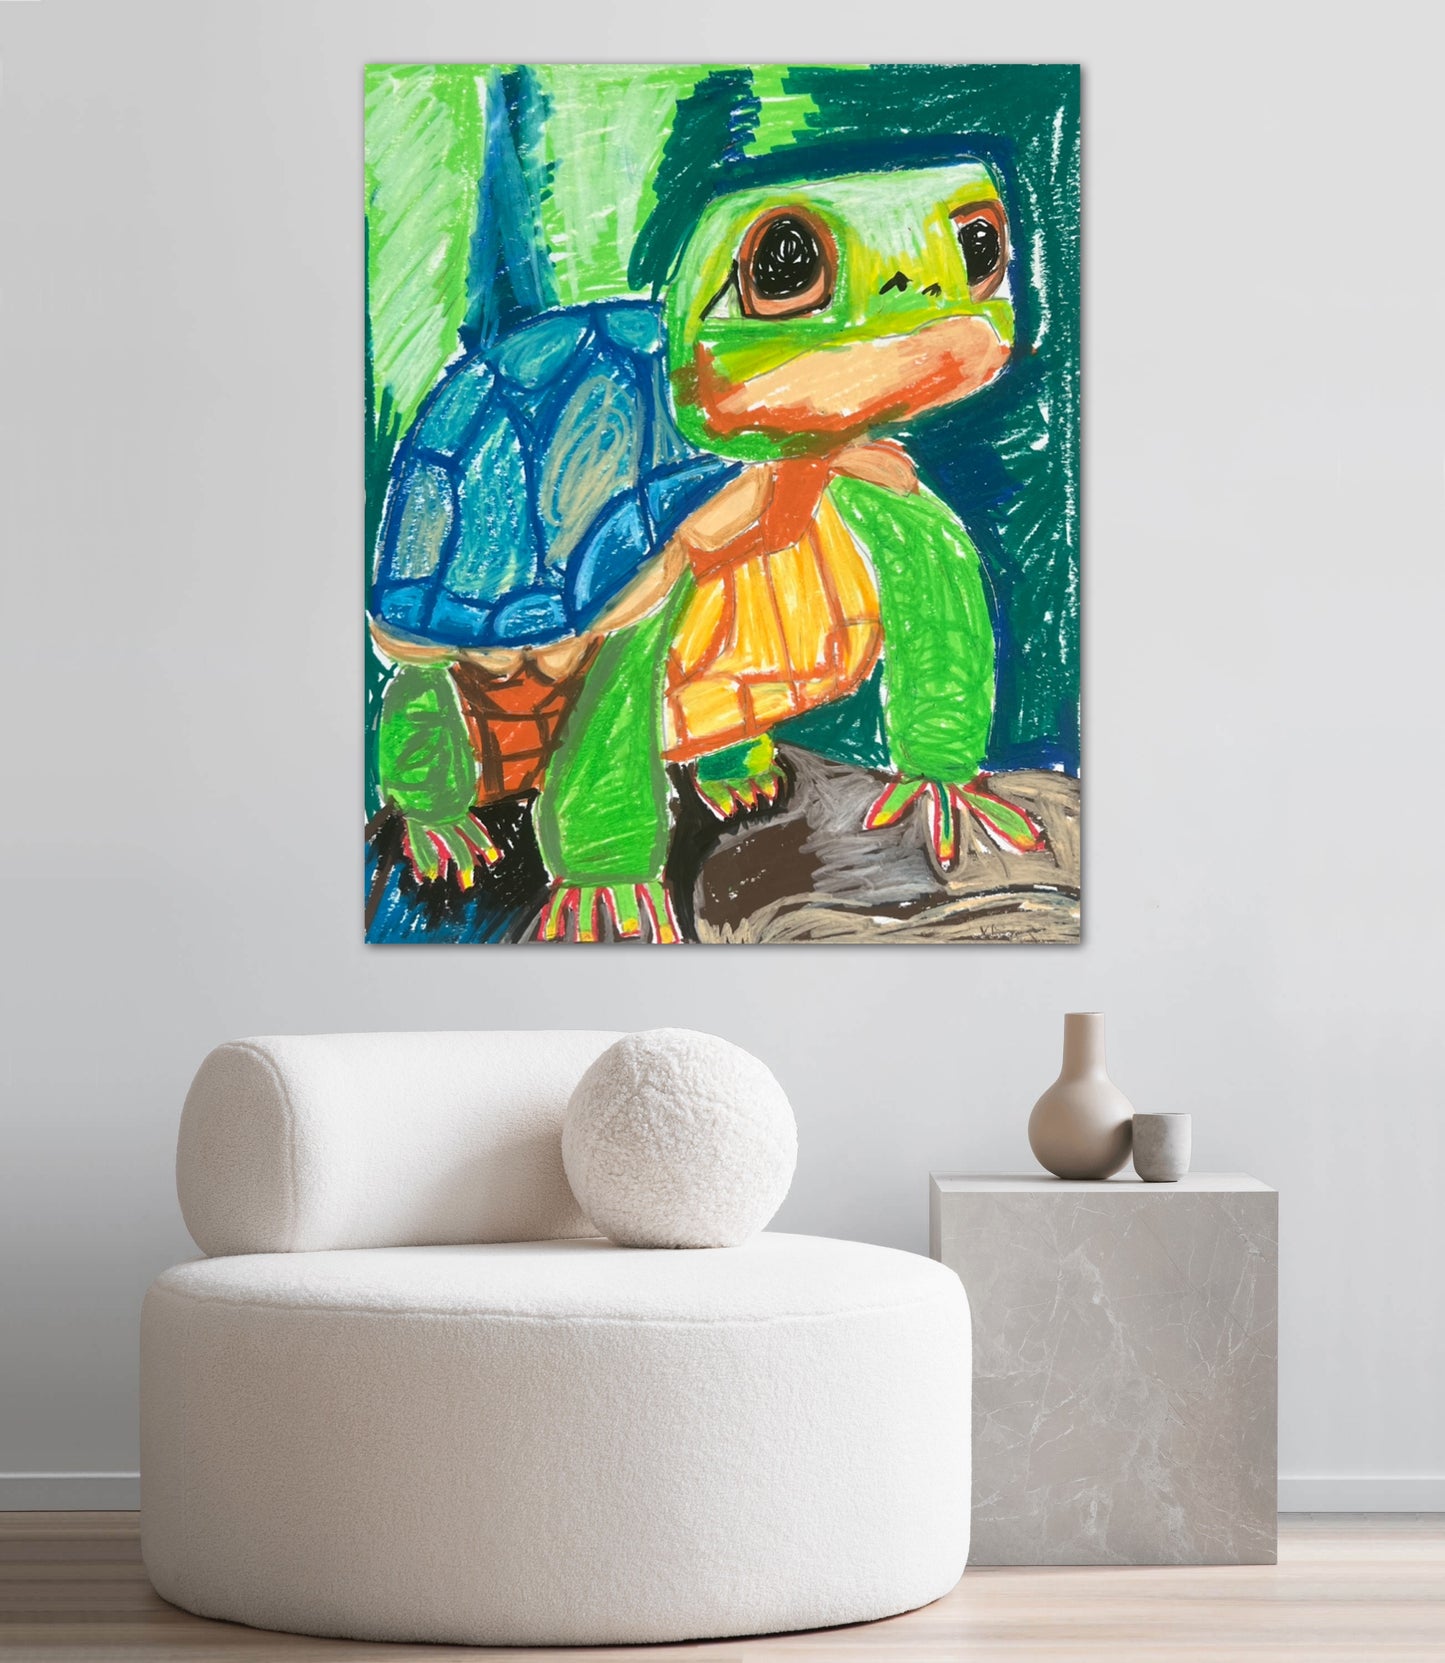 Donatello - Print, Poster, Stretched Canvas Print